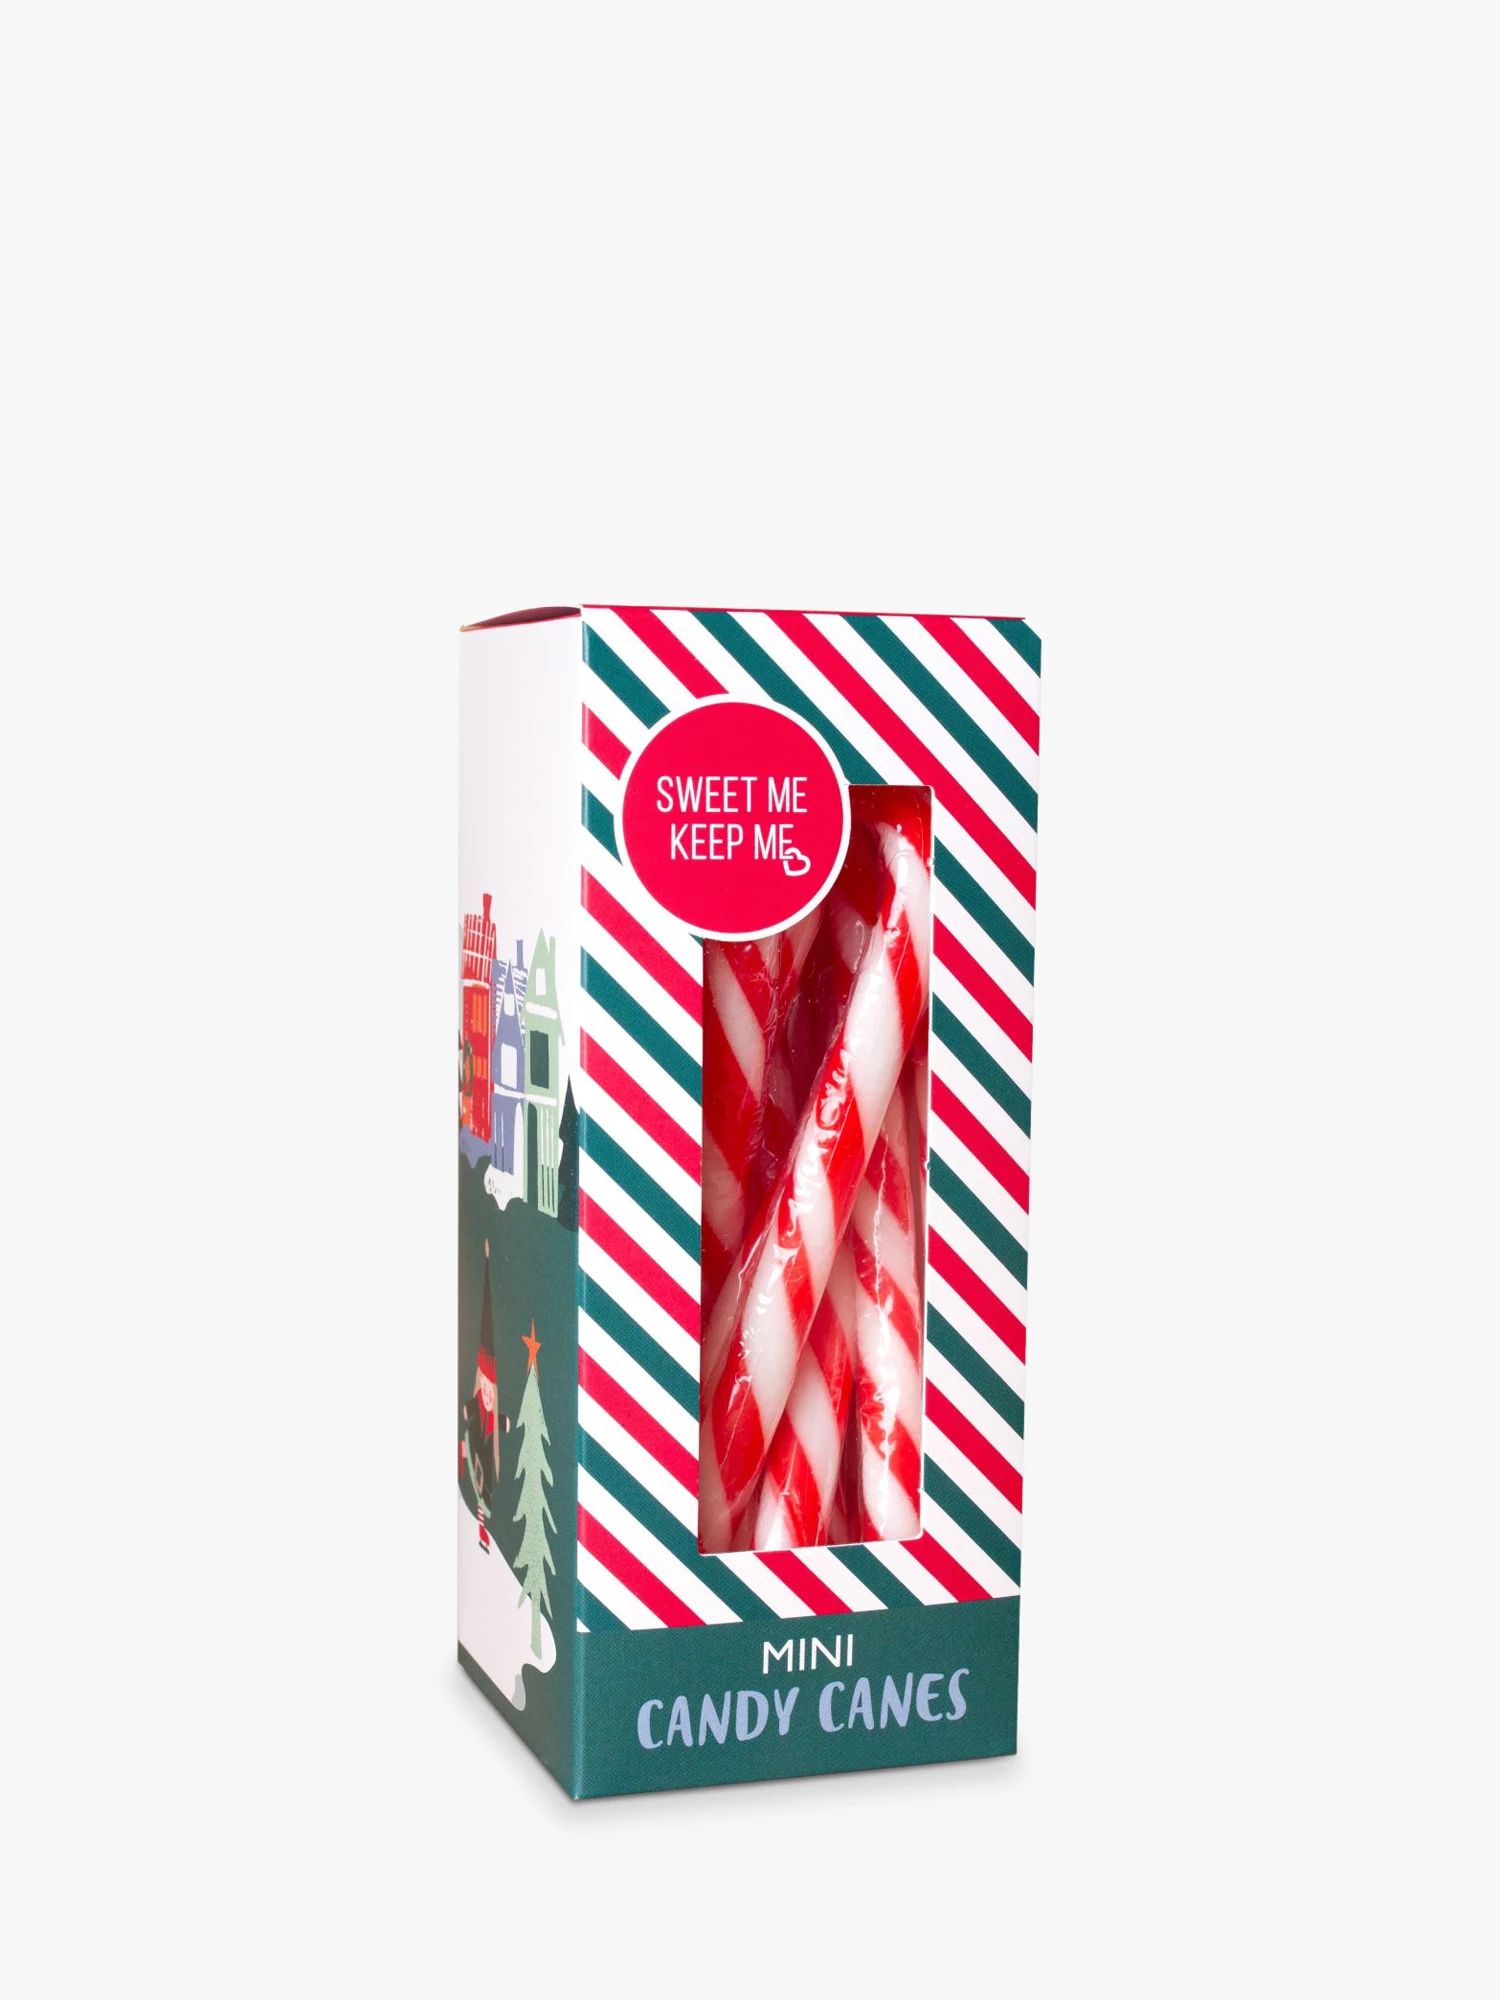 Sweet Me Keep Me Mini Candy Canes, 150g | John Lewis (UK)